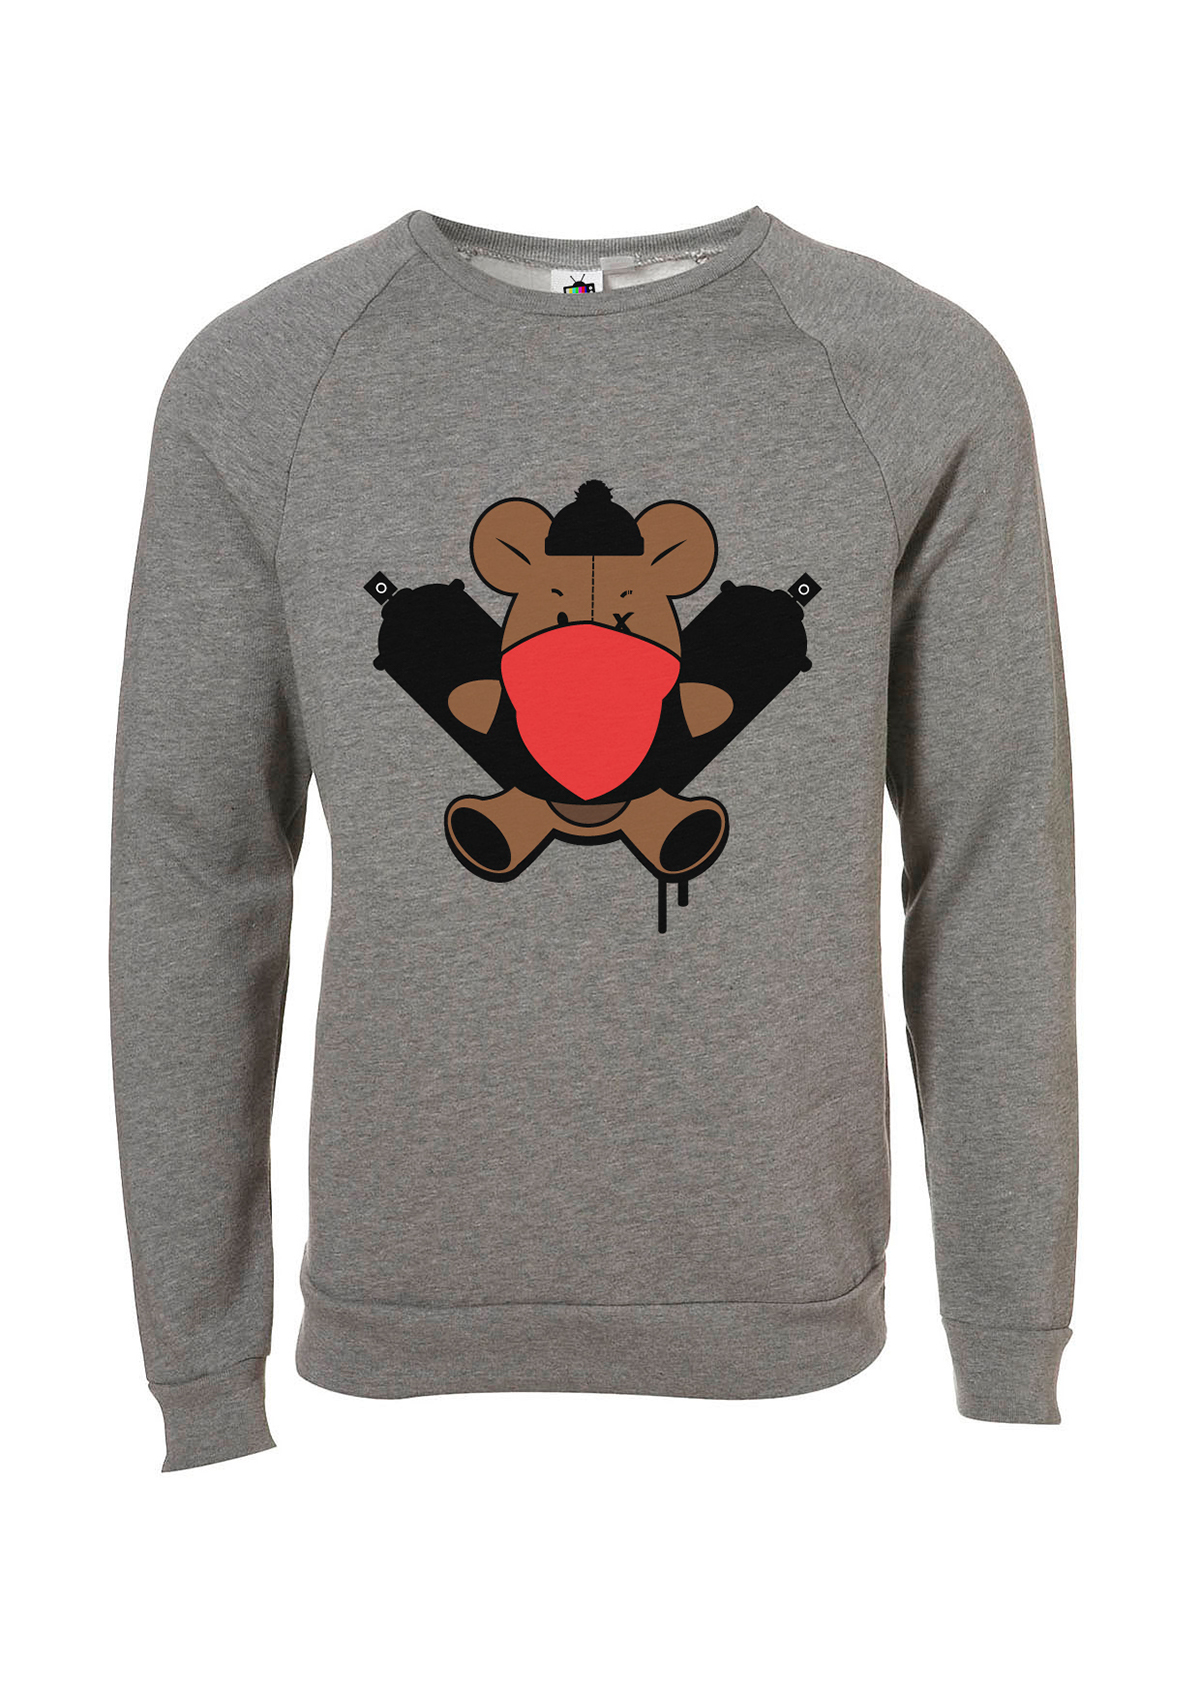 Teddy Urban Clothing Mascot Character cartoon sticker wear bear demand skate dope ink paint apparel